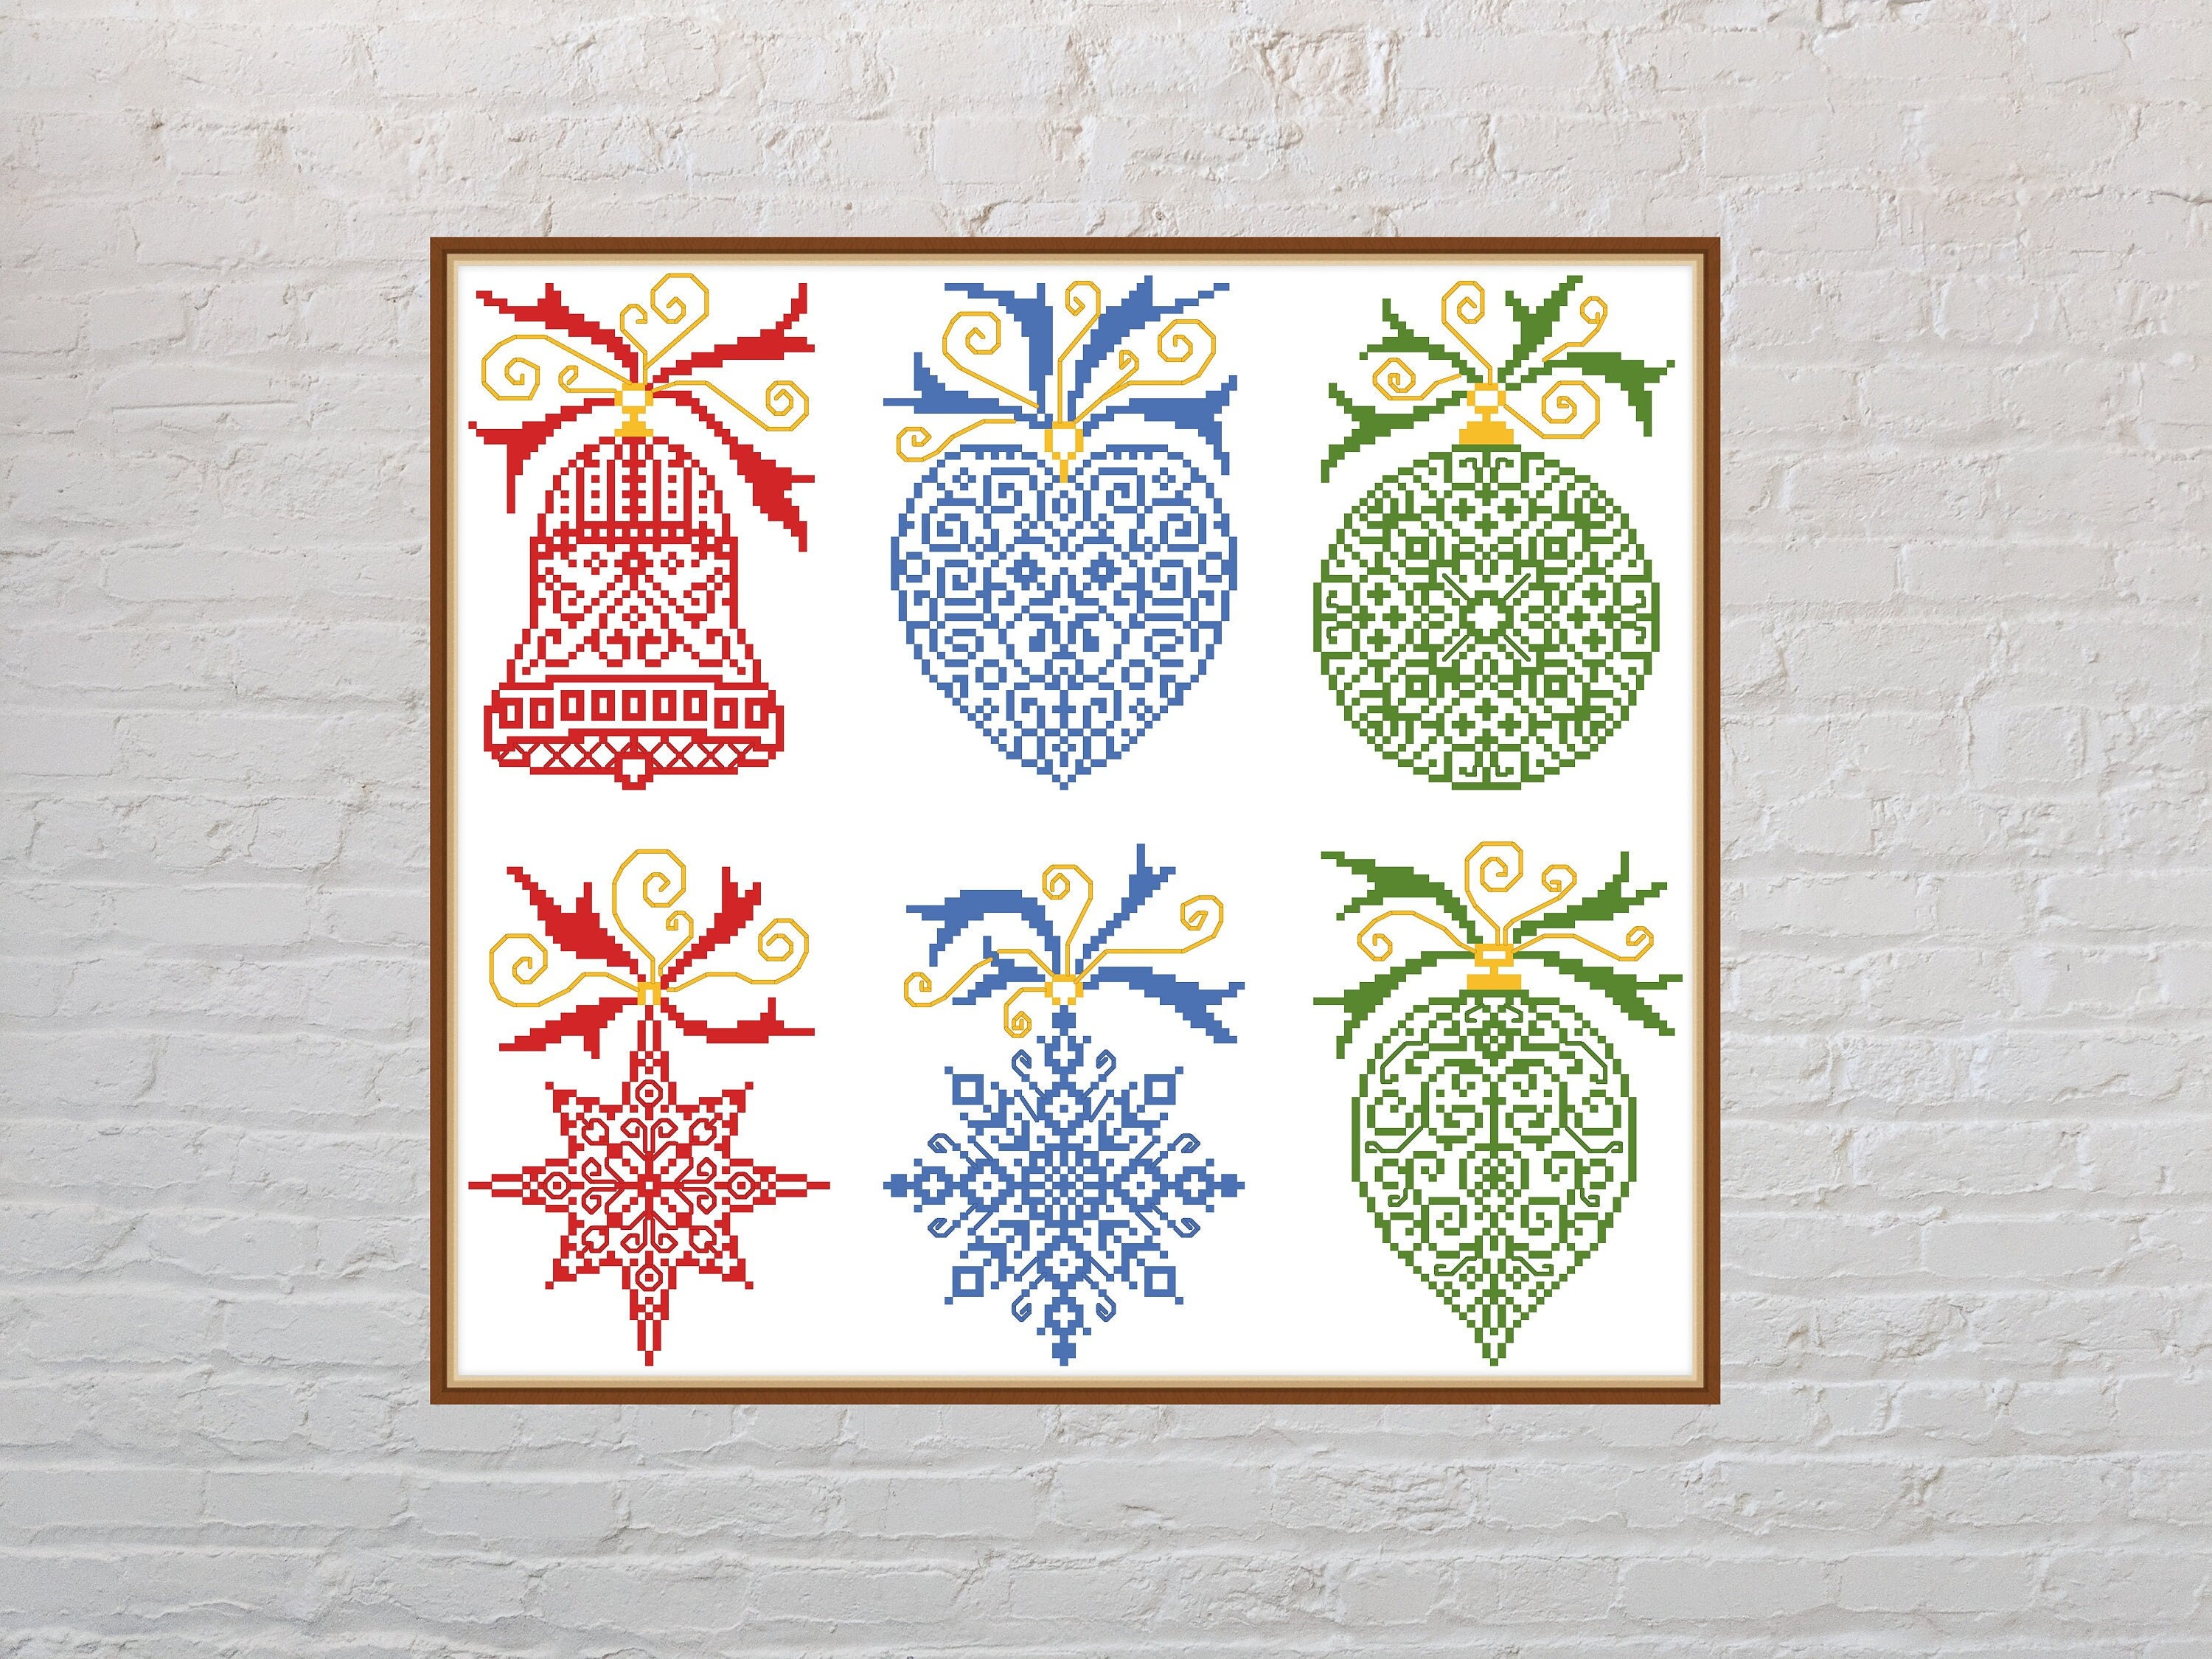 470+ Cross Stitch Ornament Frames Stock Illustrations, Royalty